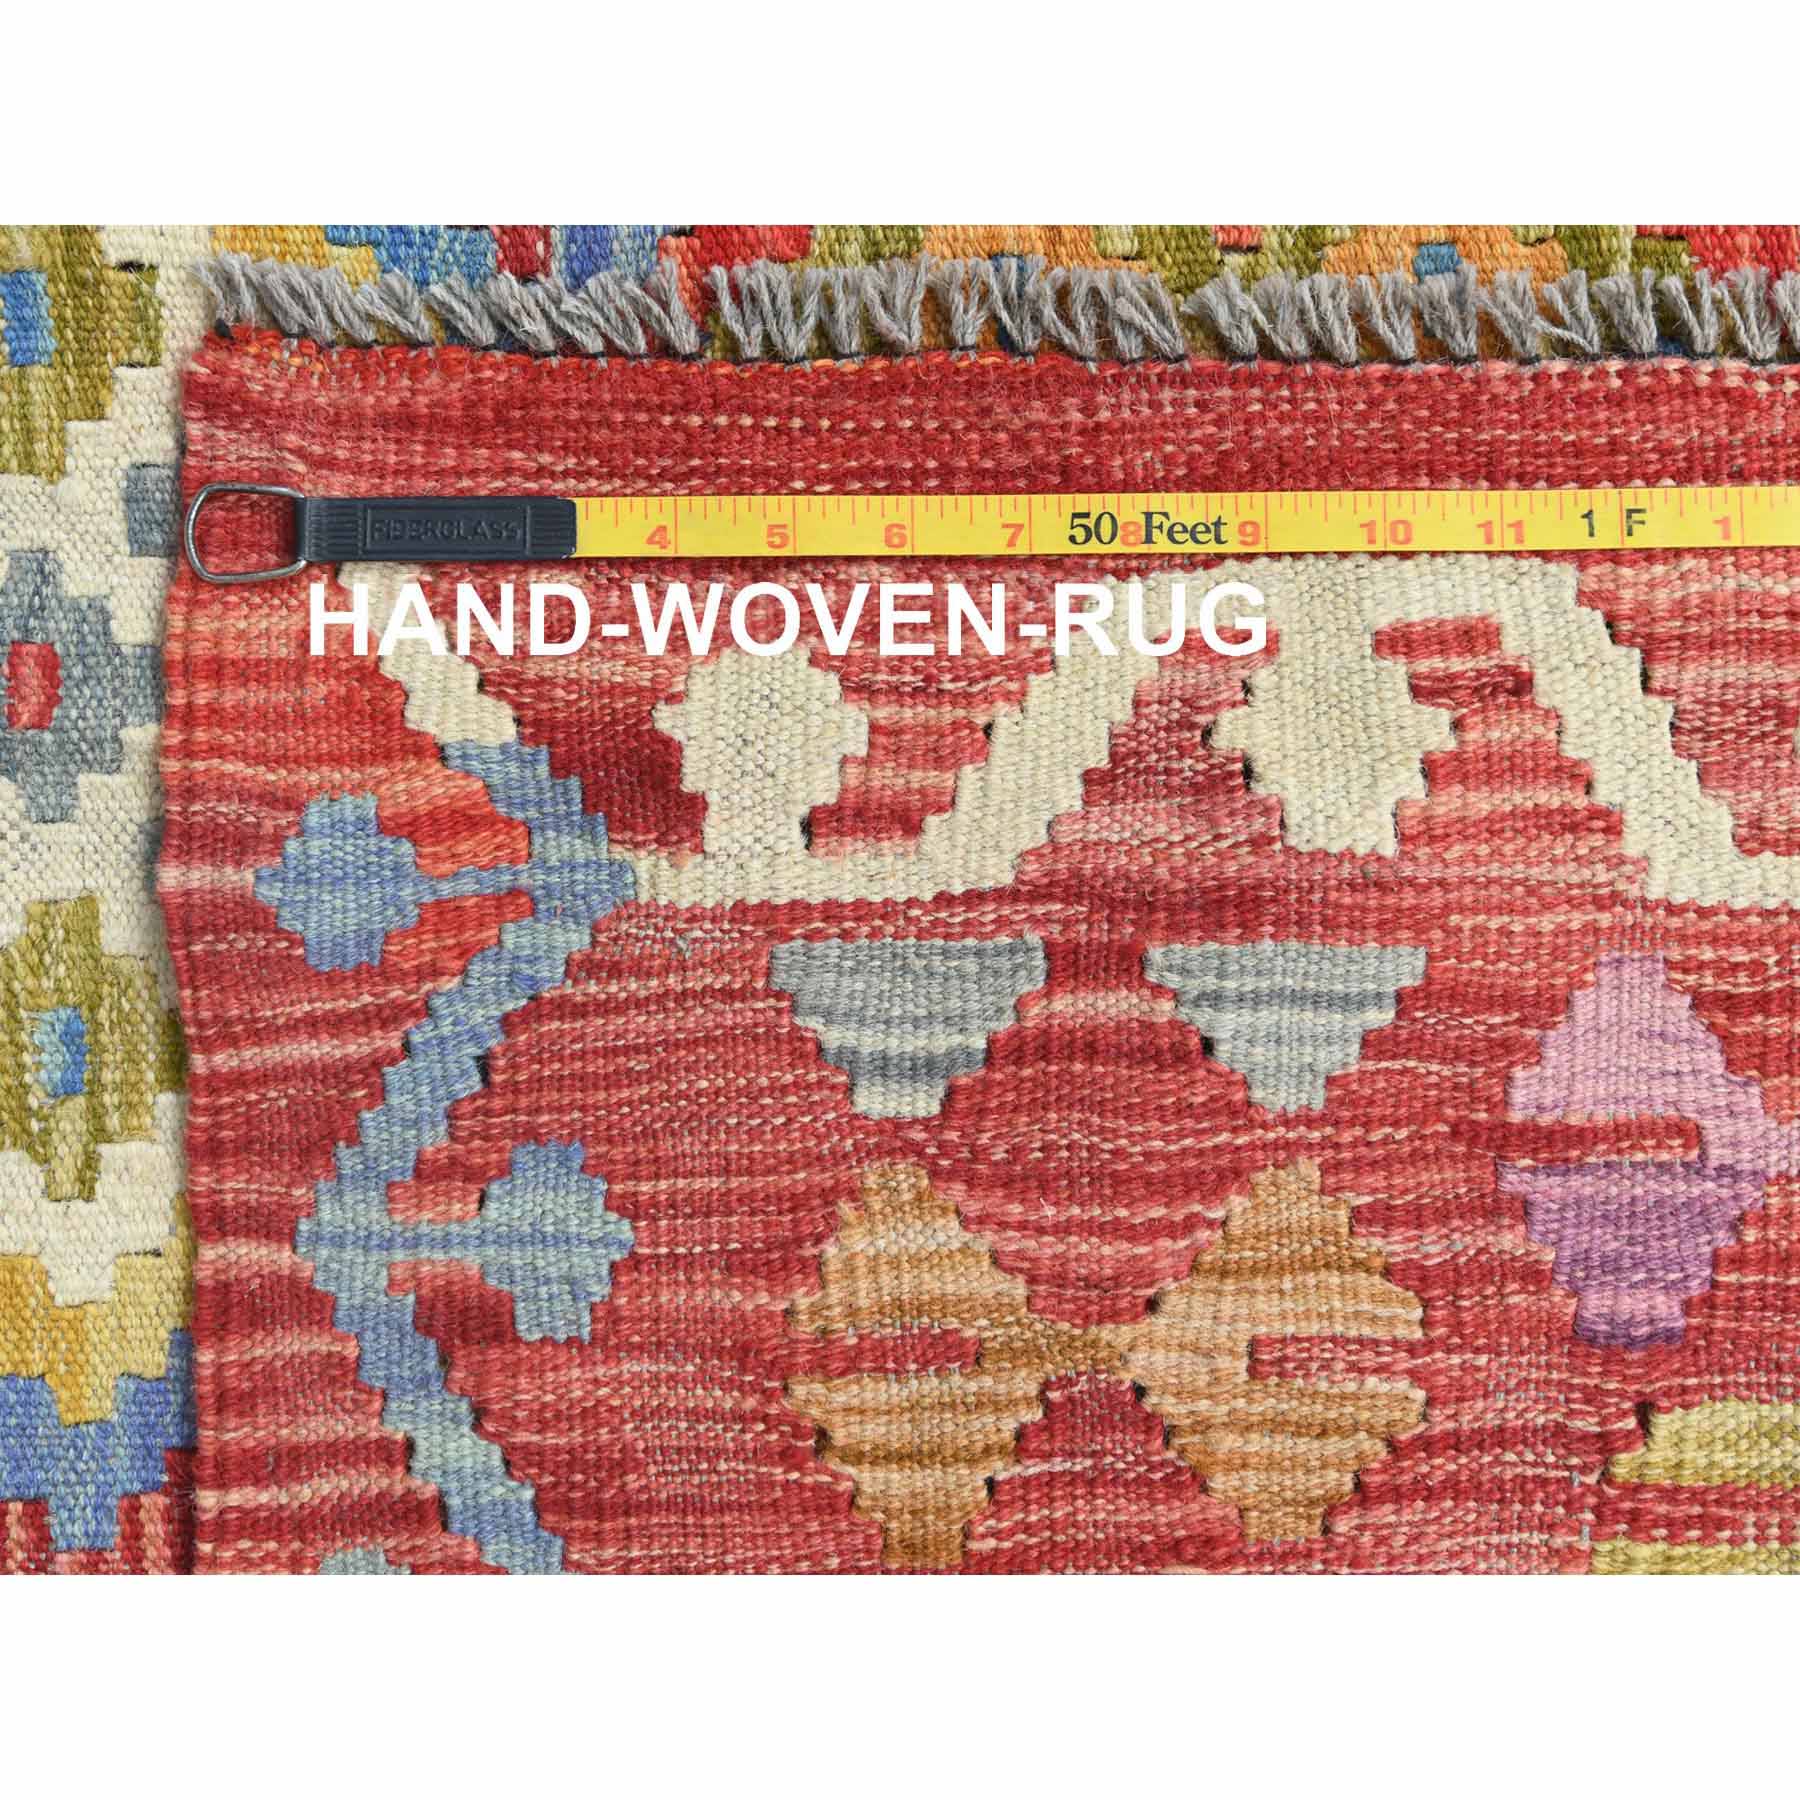 Flat-Weave-Hand-Woven-Rug-408935